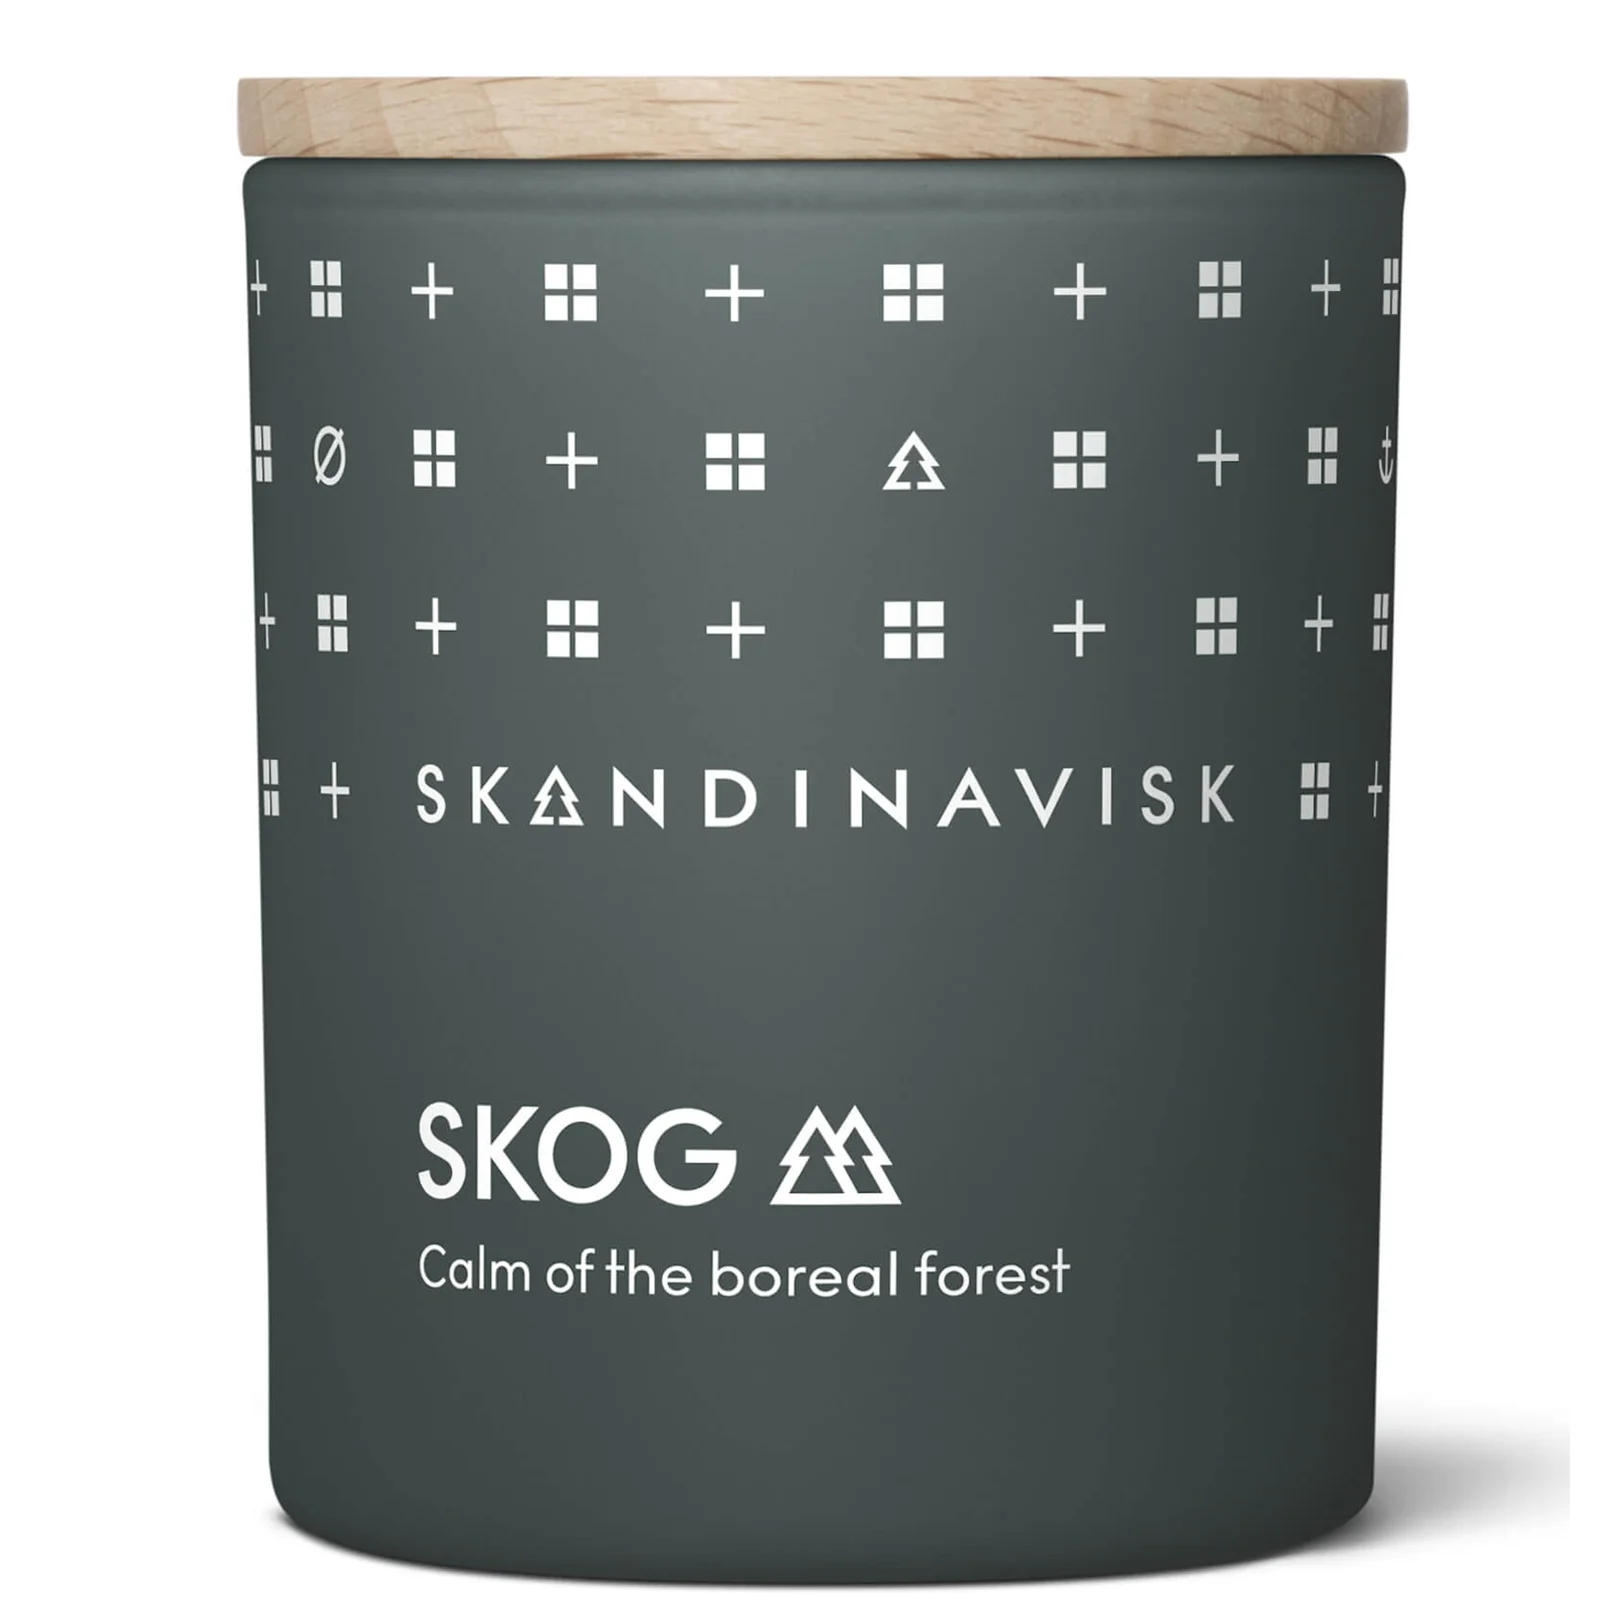 SKANDINAVISK Scented Mini Candle - Skog Image 1